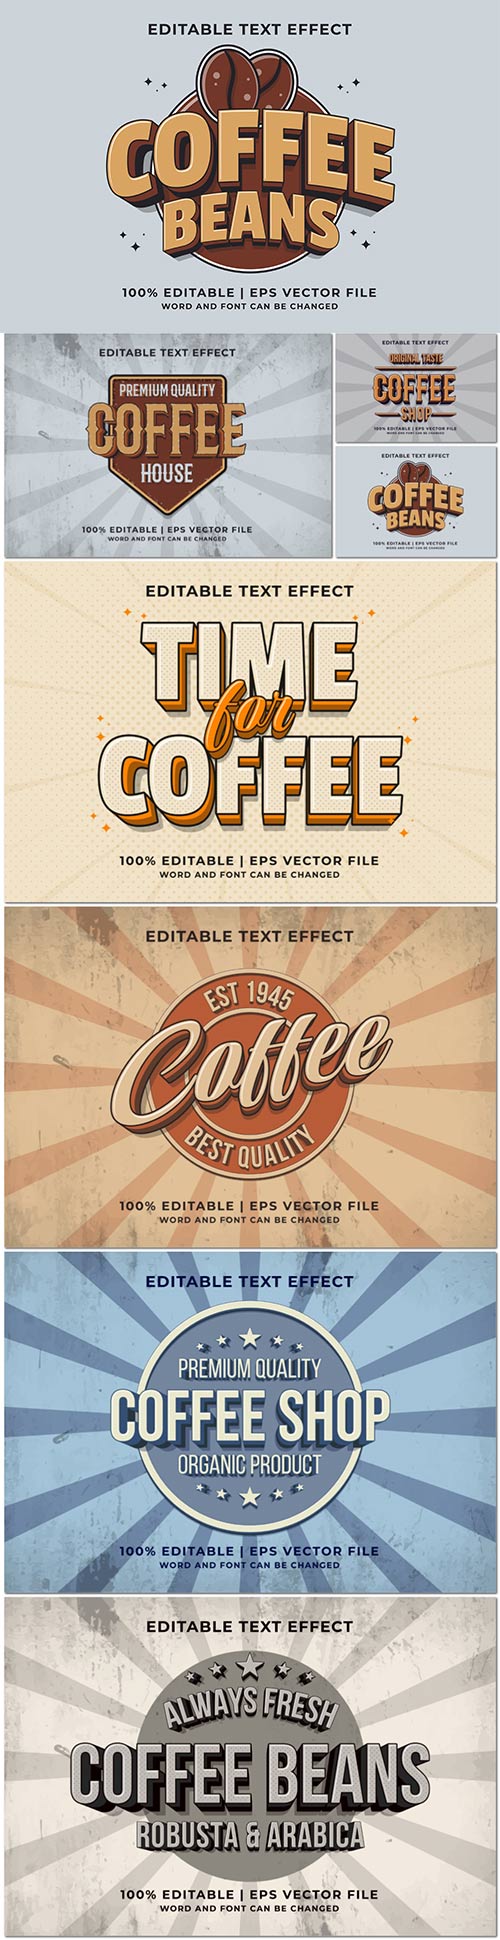 Editable text effect - coffee beans retro template style premium vector